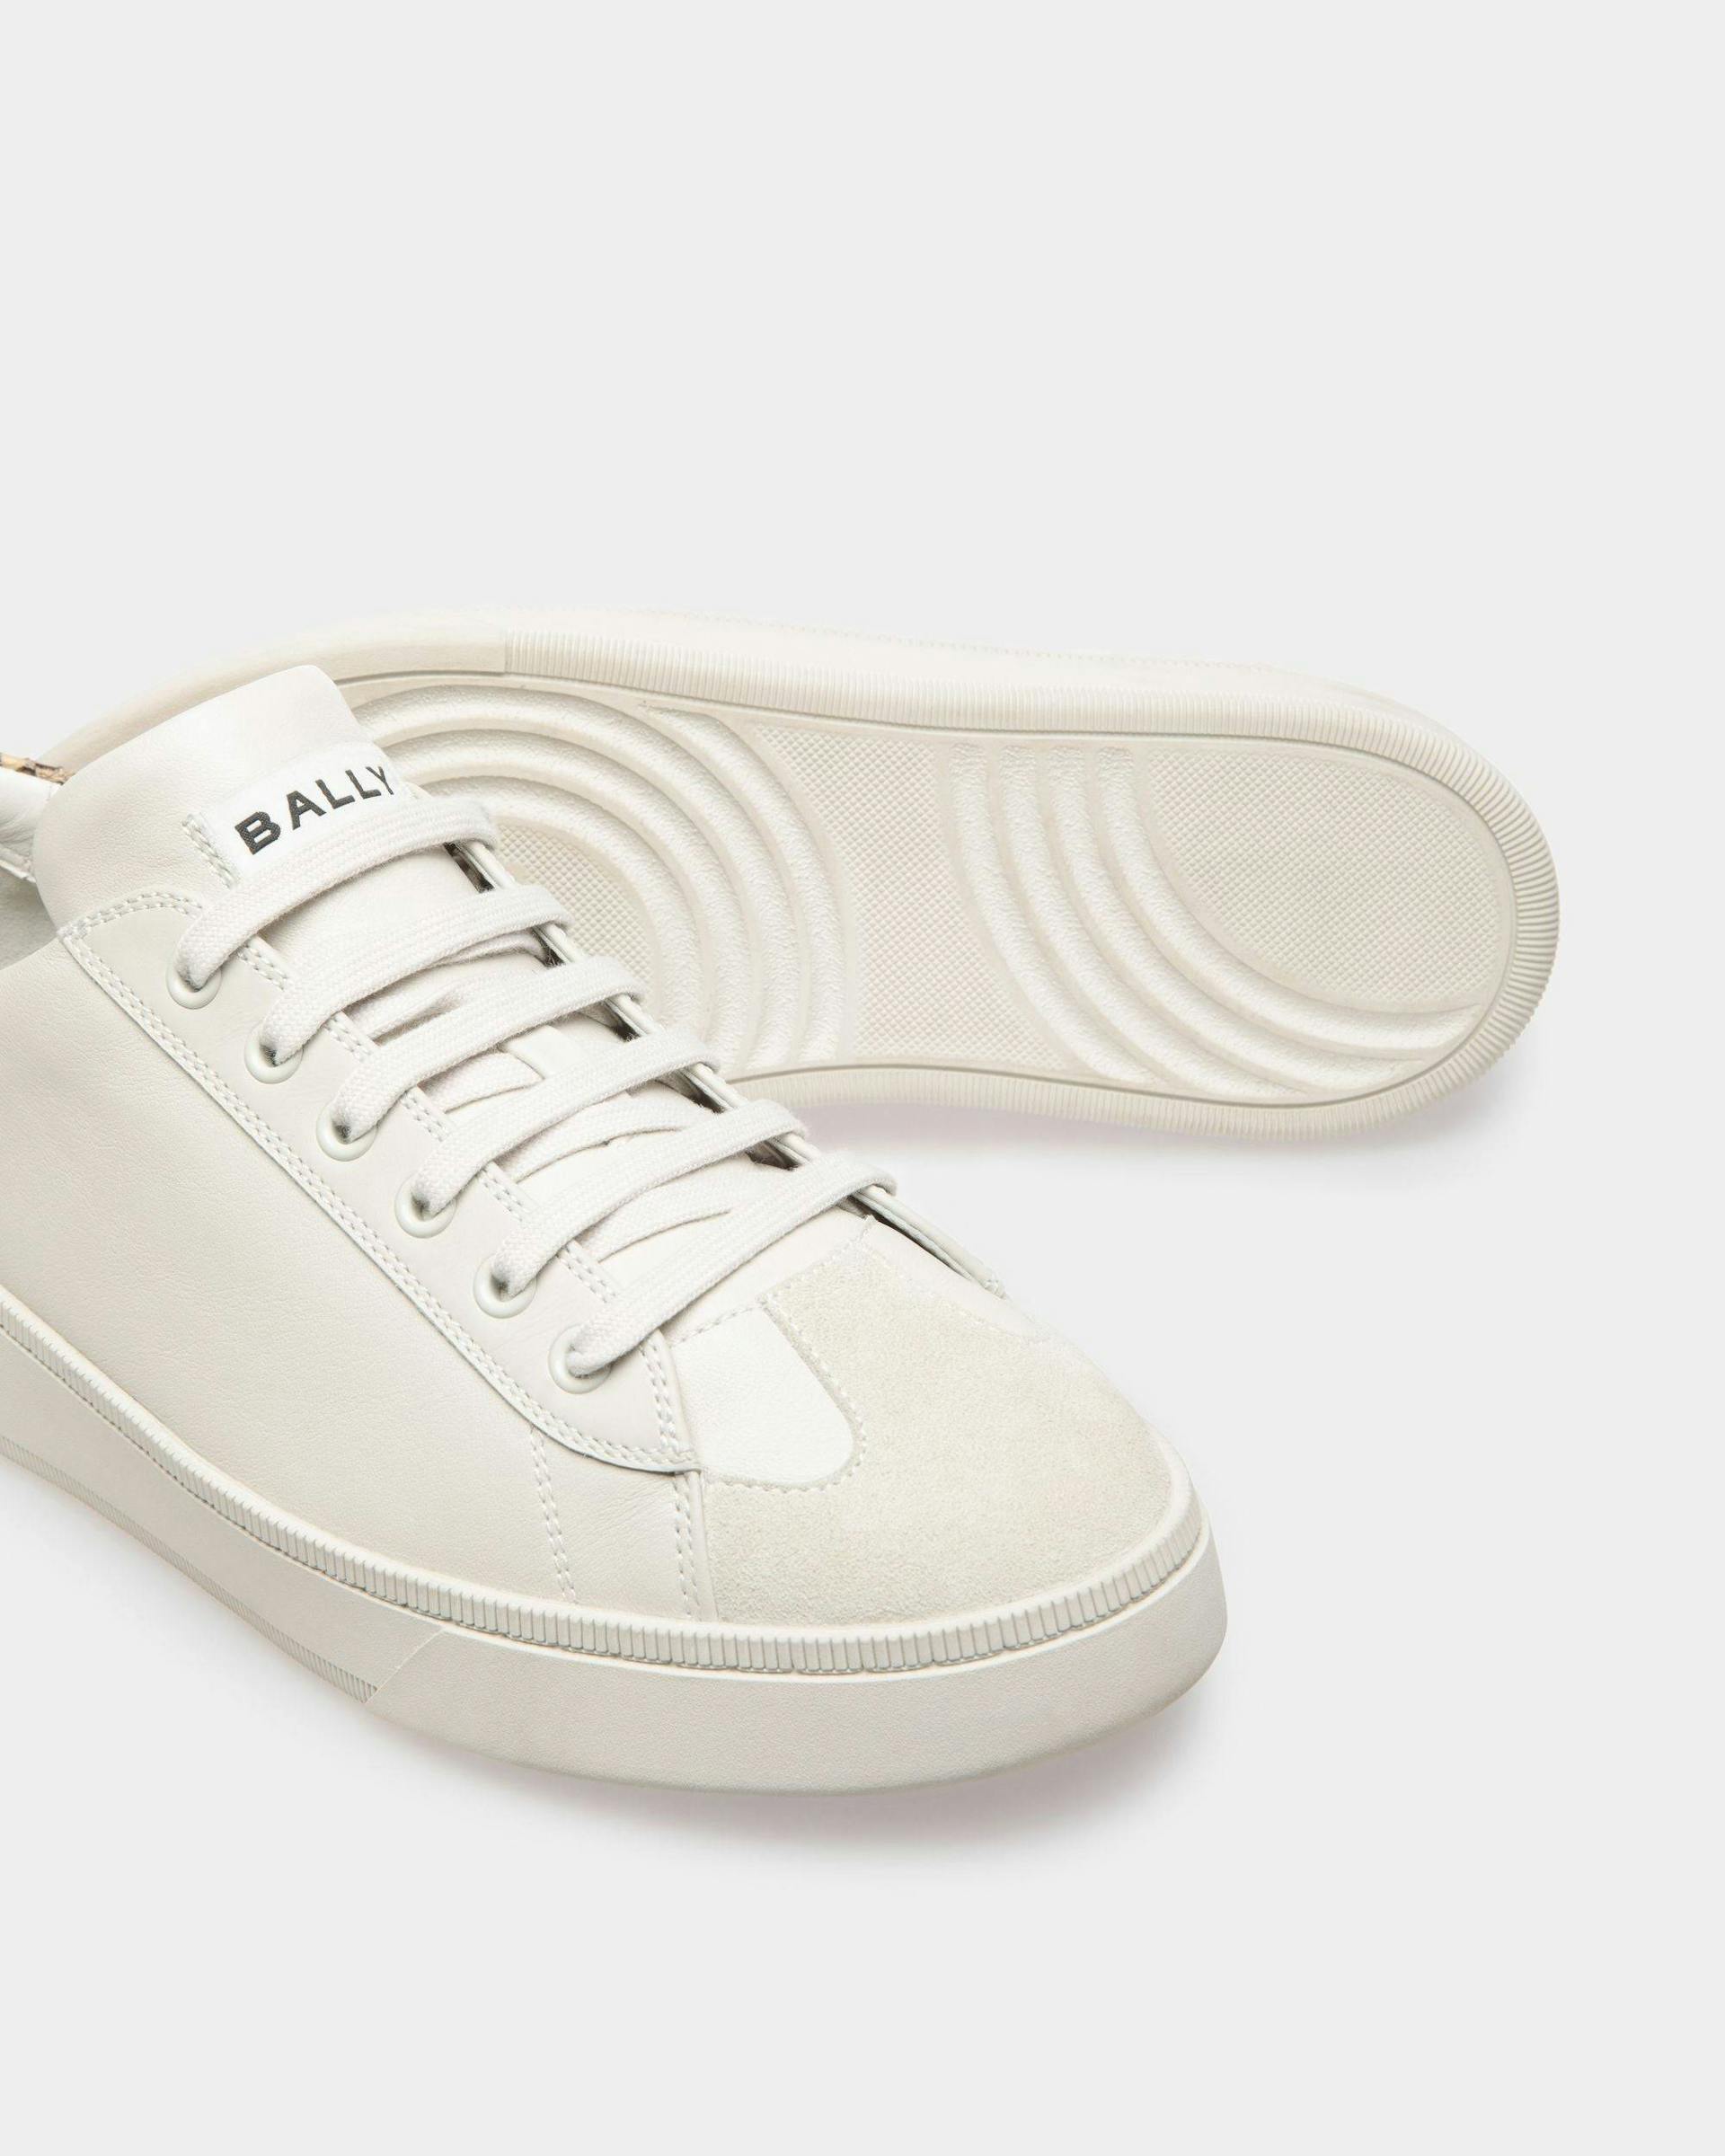 Raise Sneakers In Dusty White Leather - Men's - Bally - 05